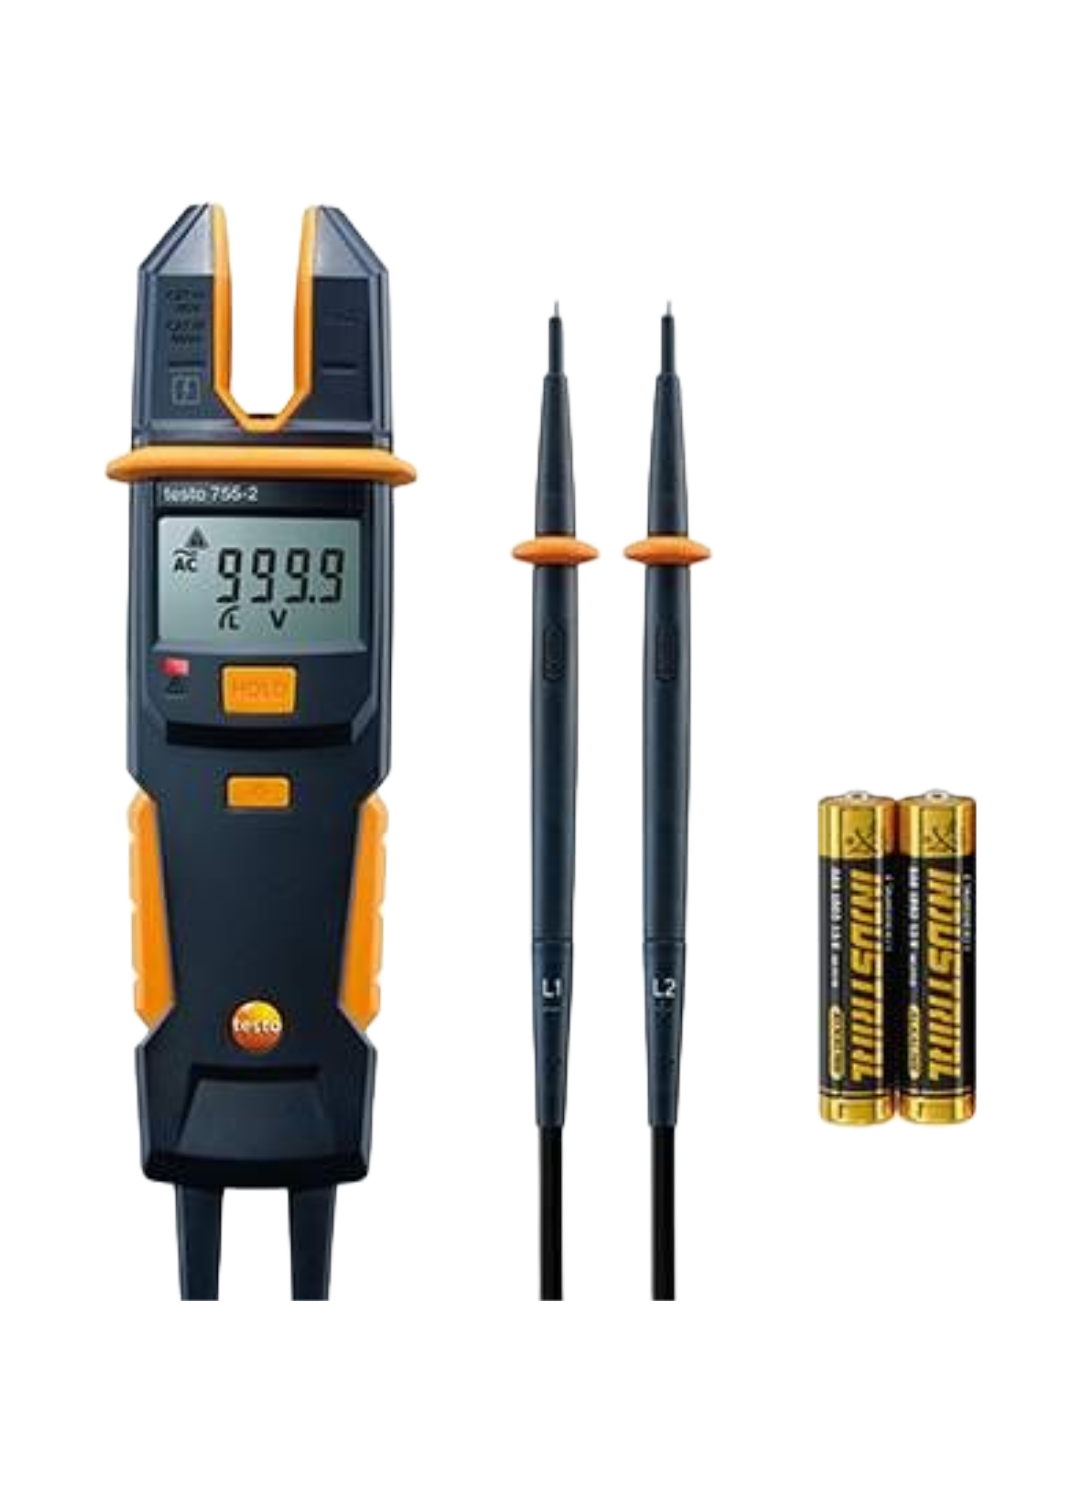 testo 755-2 - Strom-Spannungsprüfer